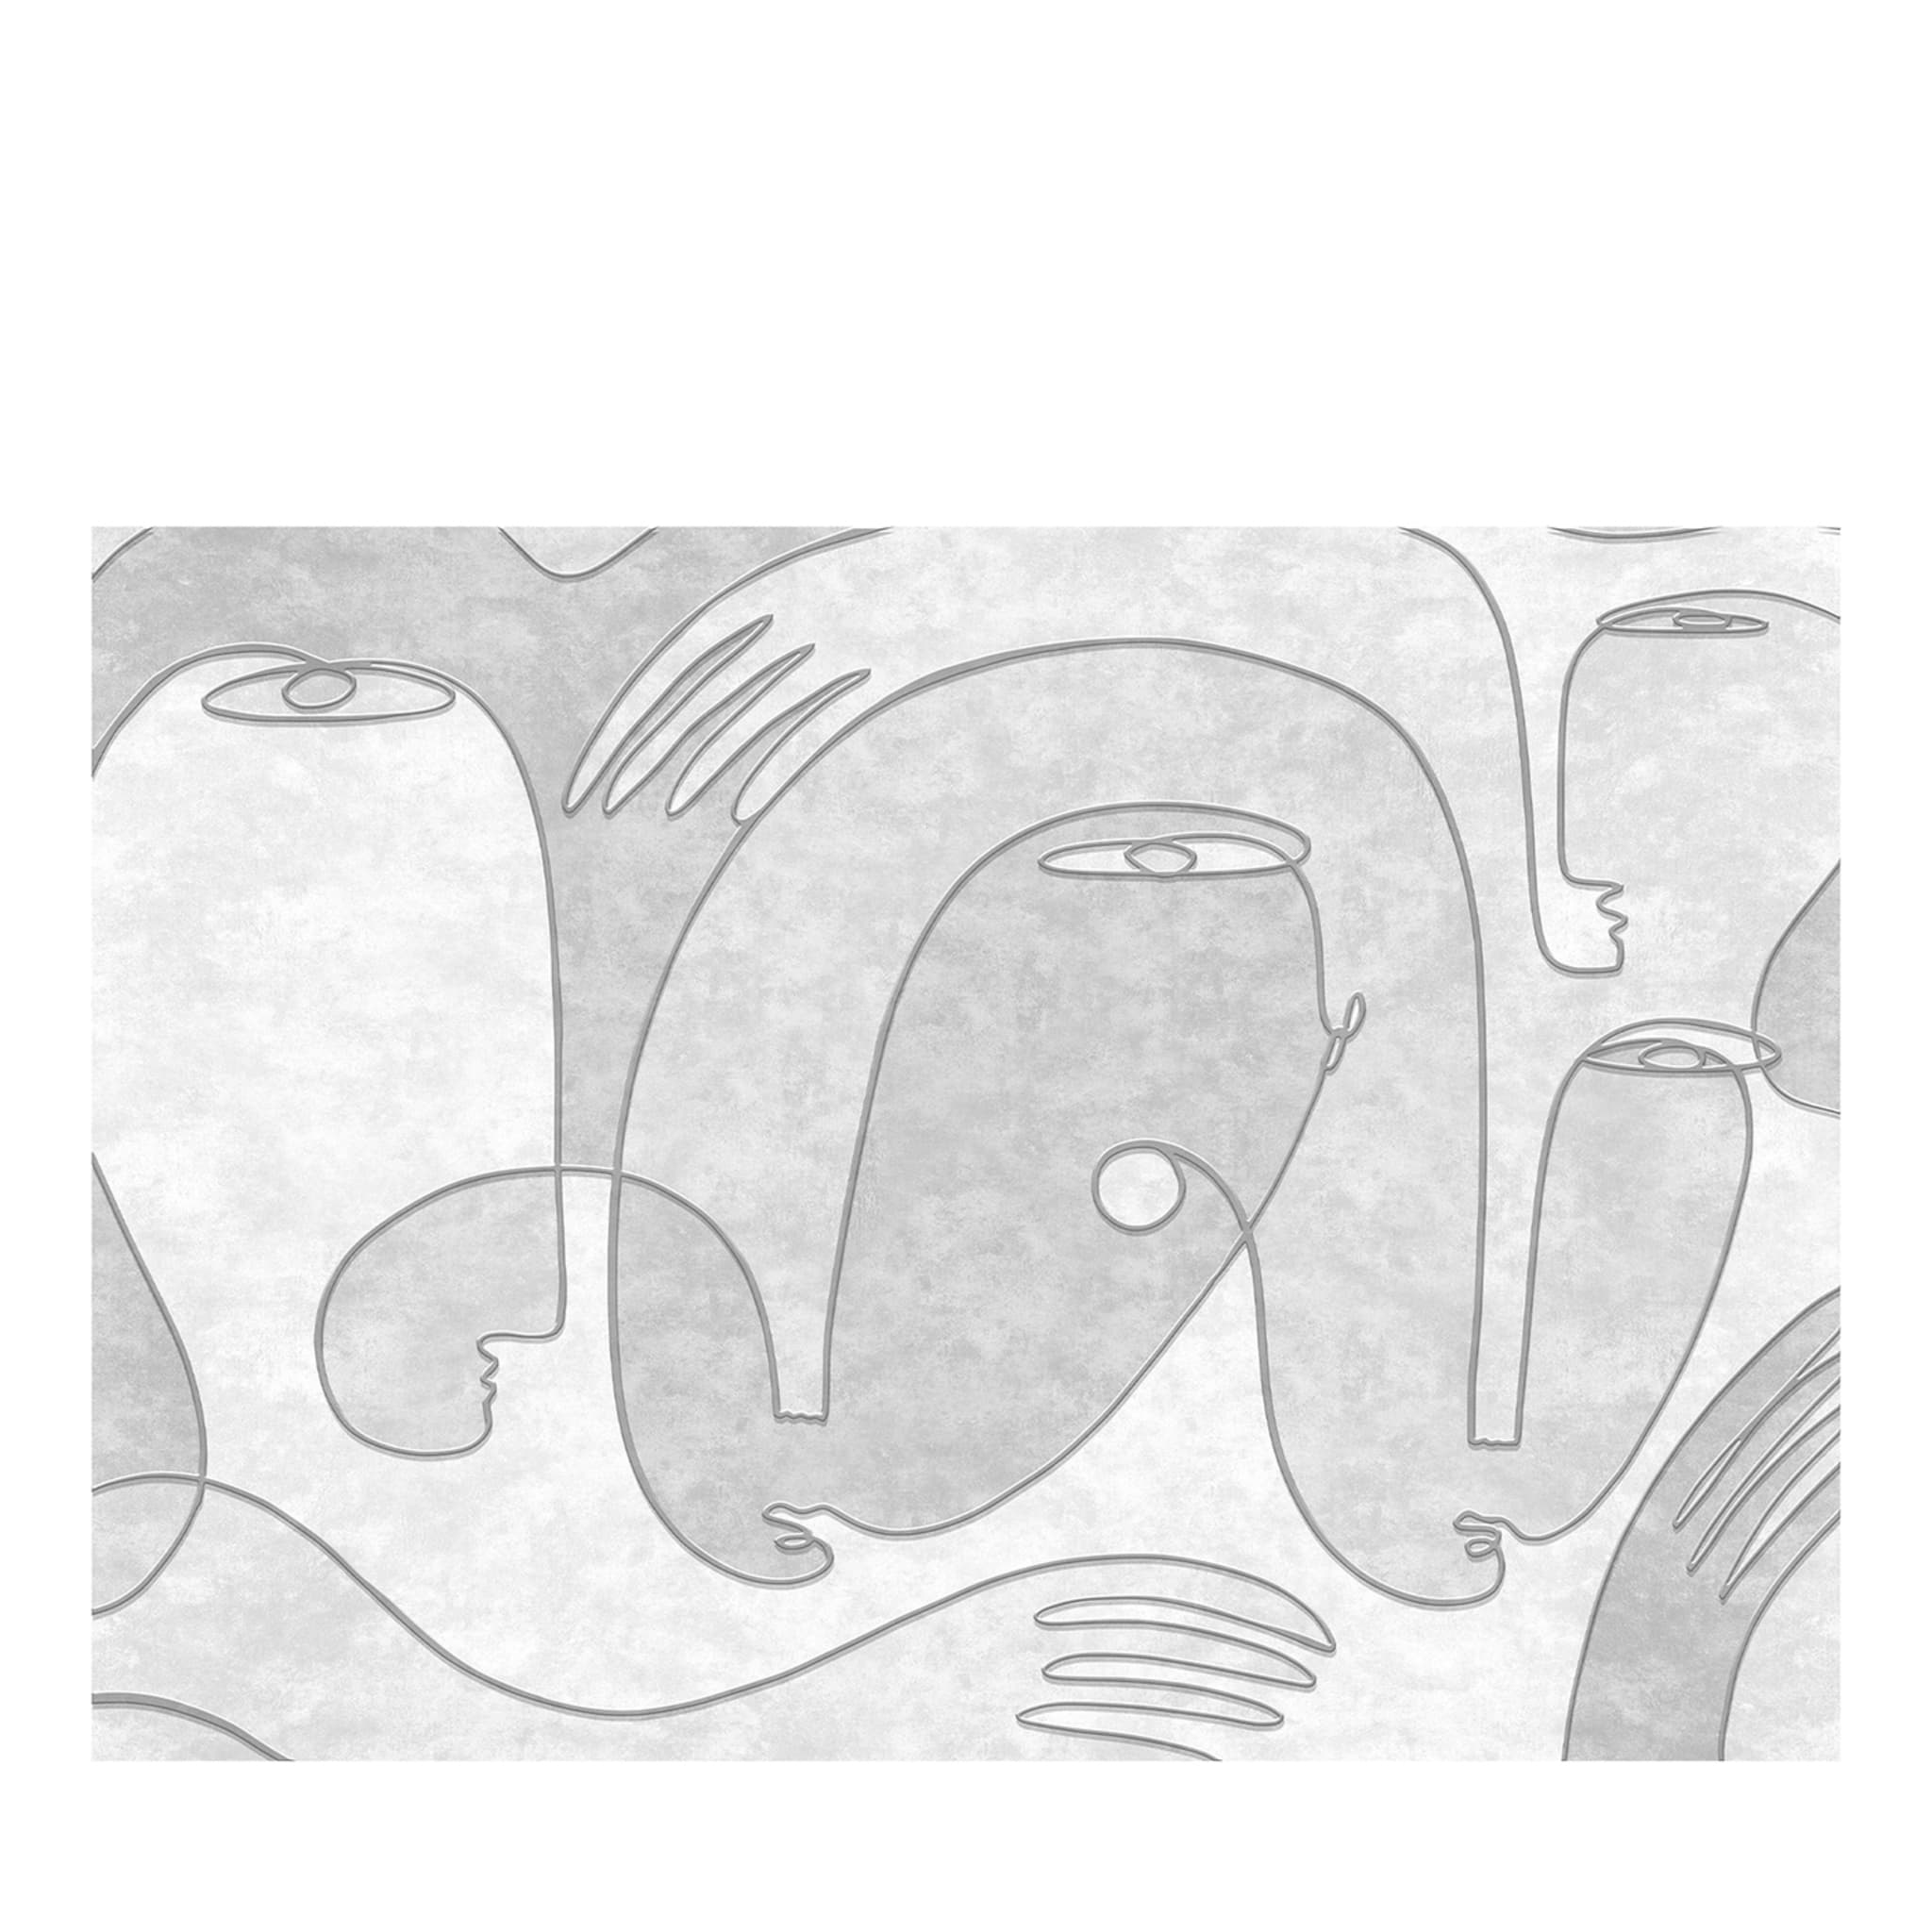 Oneline greyish textured wallpaper  - Main view